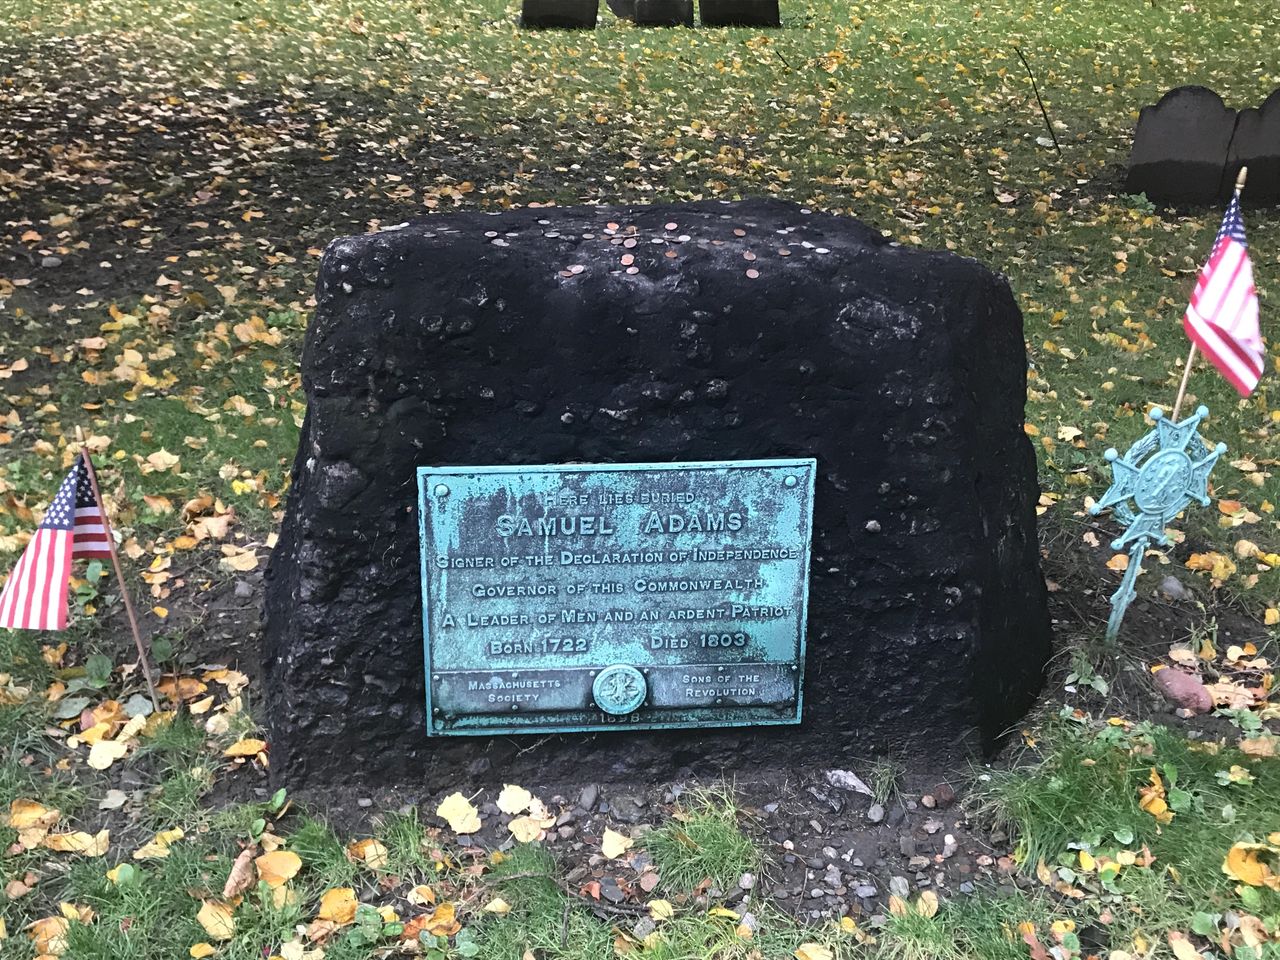 Samuel Adams' headstone